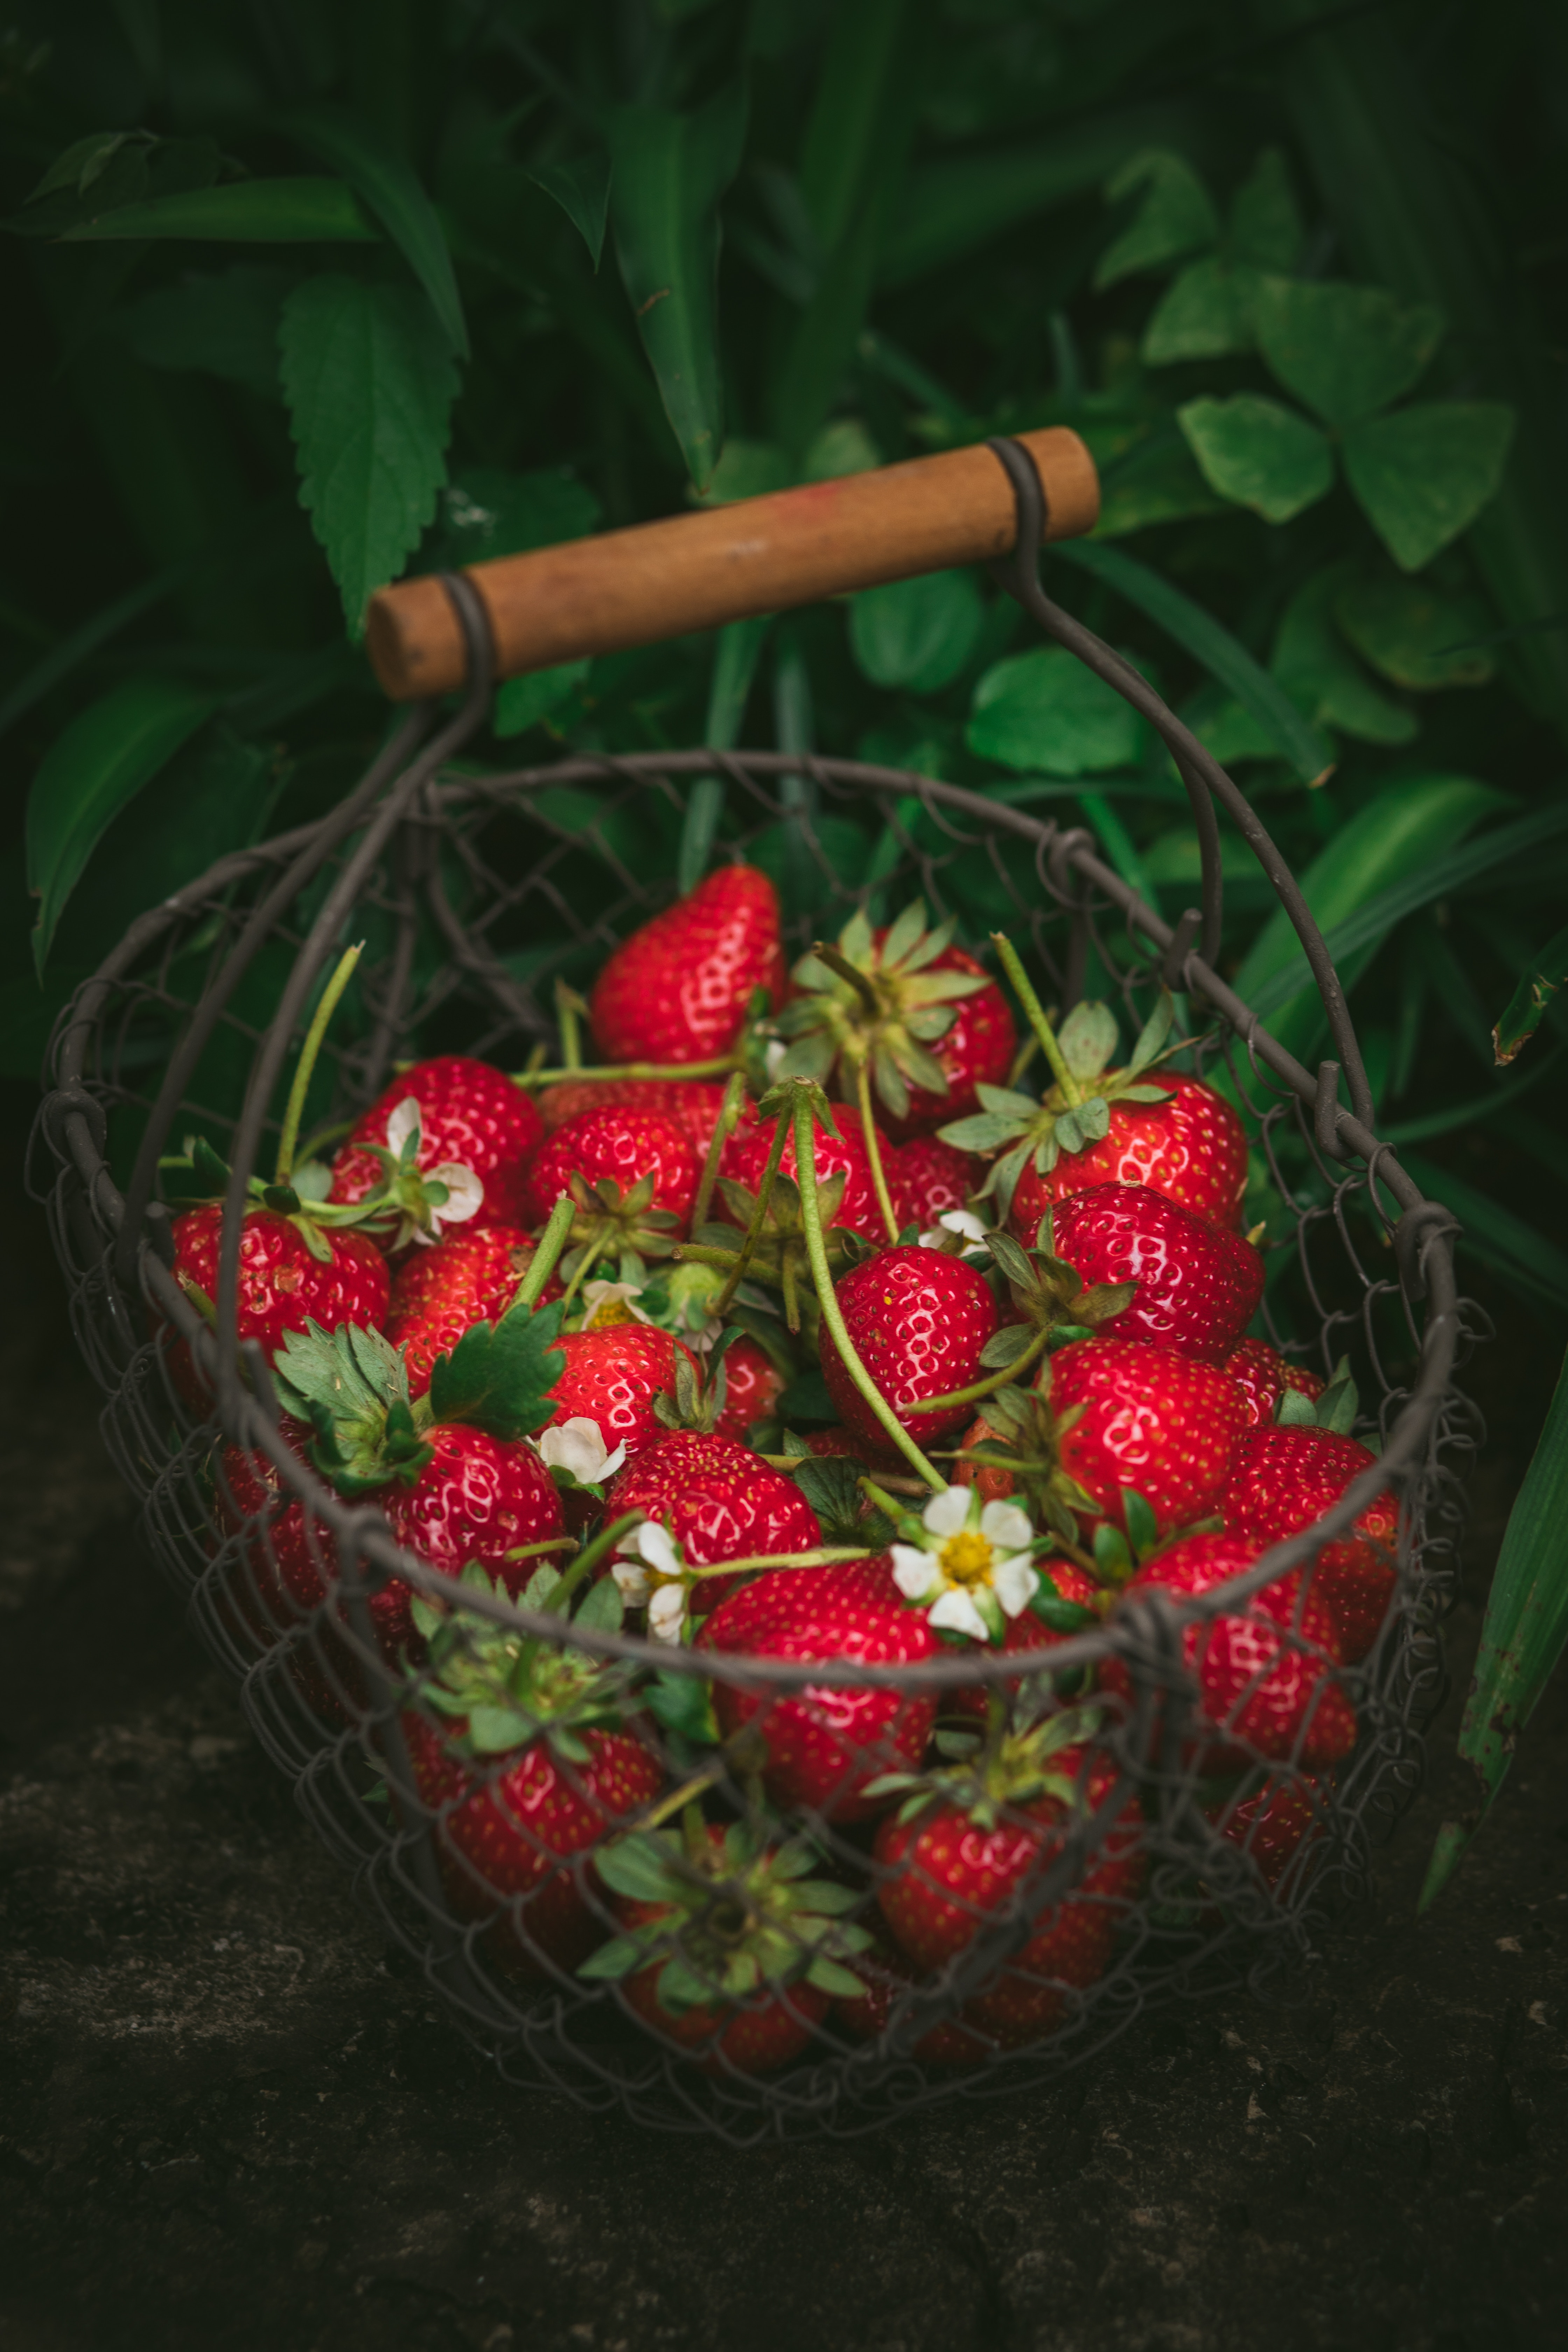 strawberry, berries, fresh, food, red, basket, ripe